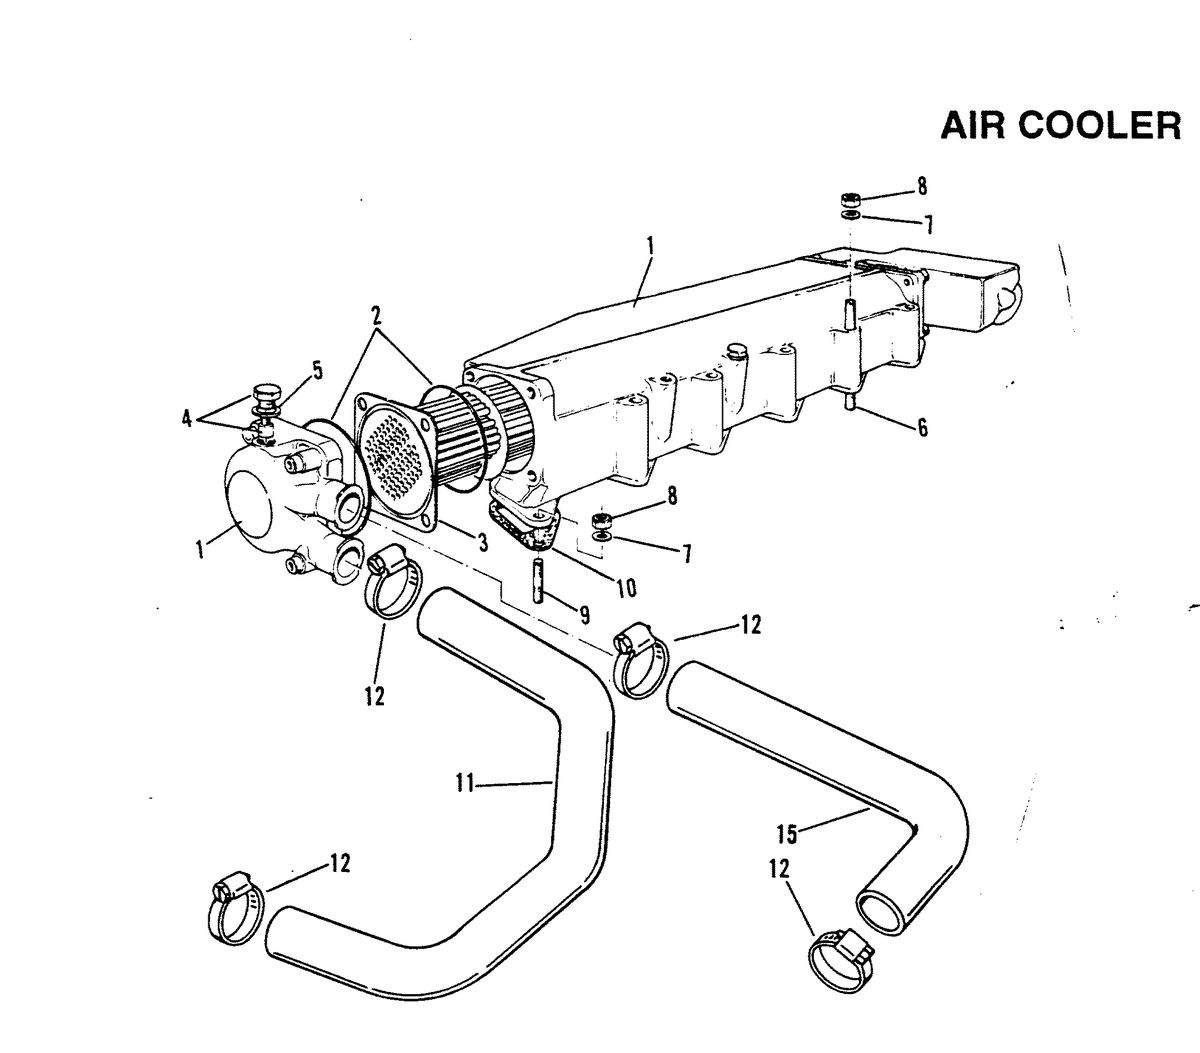 MERCRUISER D-254 TURBO ACDIESEL ENGINE STERN DRIVE/INBOARD AIR COOLER